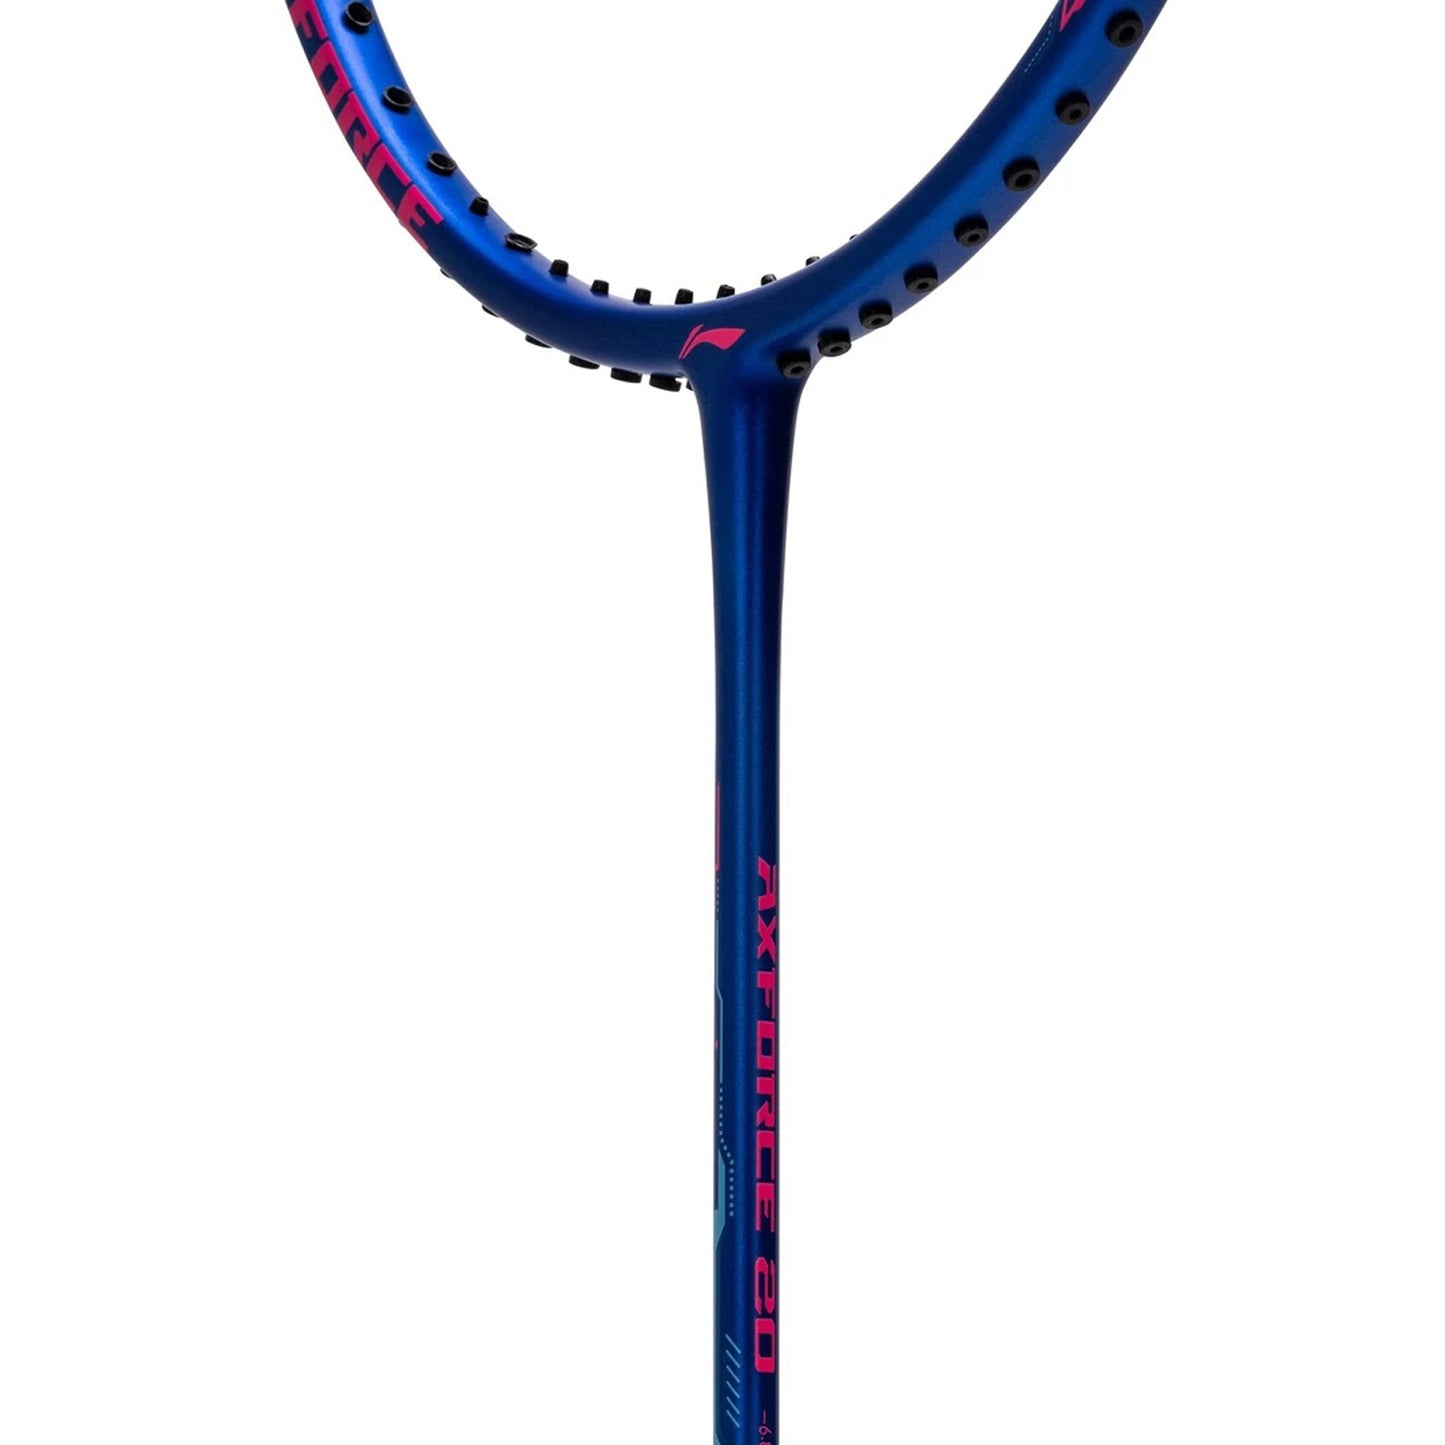 Li-Ning AXFORCE 20 (4U-G5) Unstrung Badminton Racquet, Blue/White - Best Price online Prokicksports.com